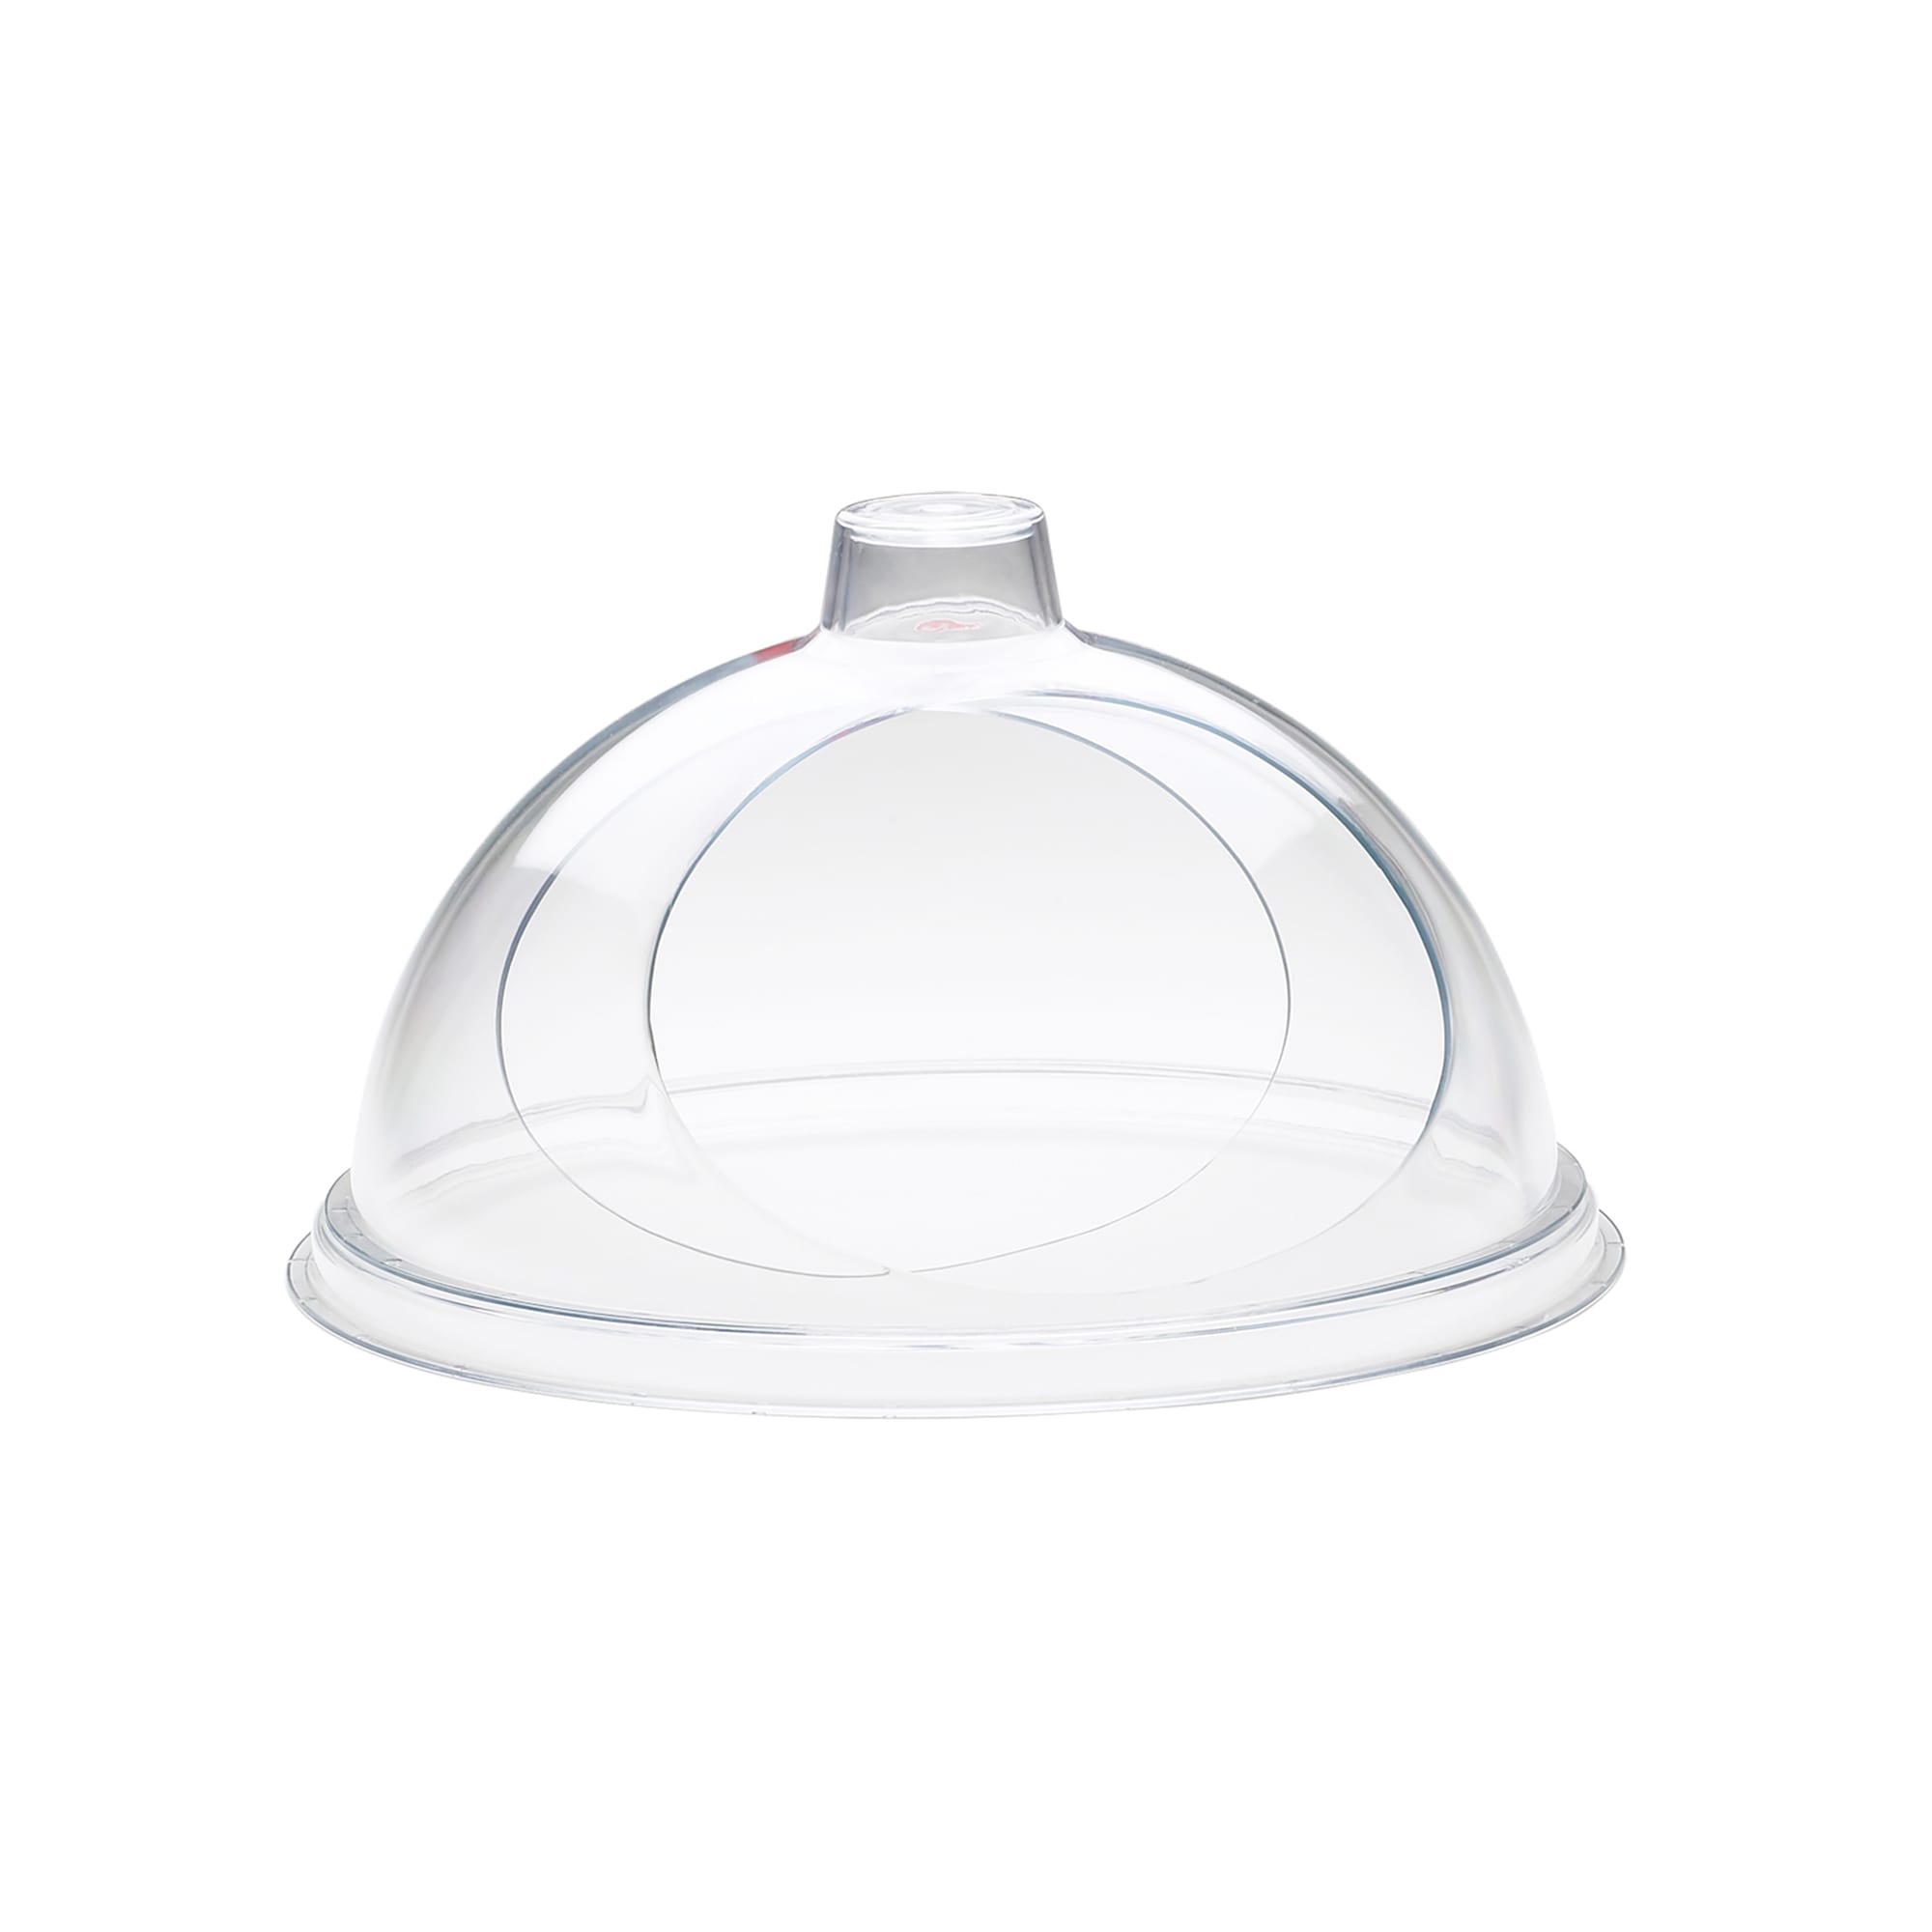 15Dia x 7 1/2H Cal-Mil Clear Acrylic Turn-N-Serve Classic Dome 